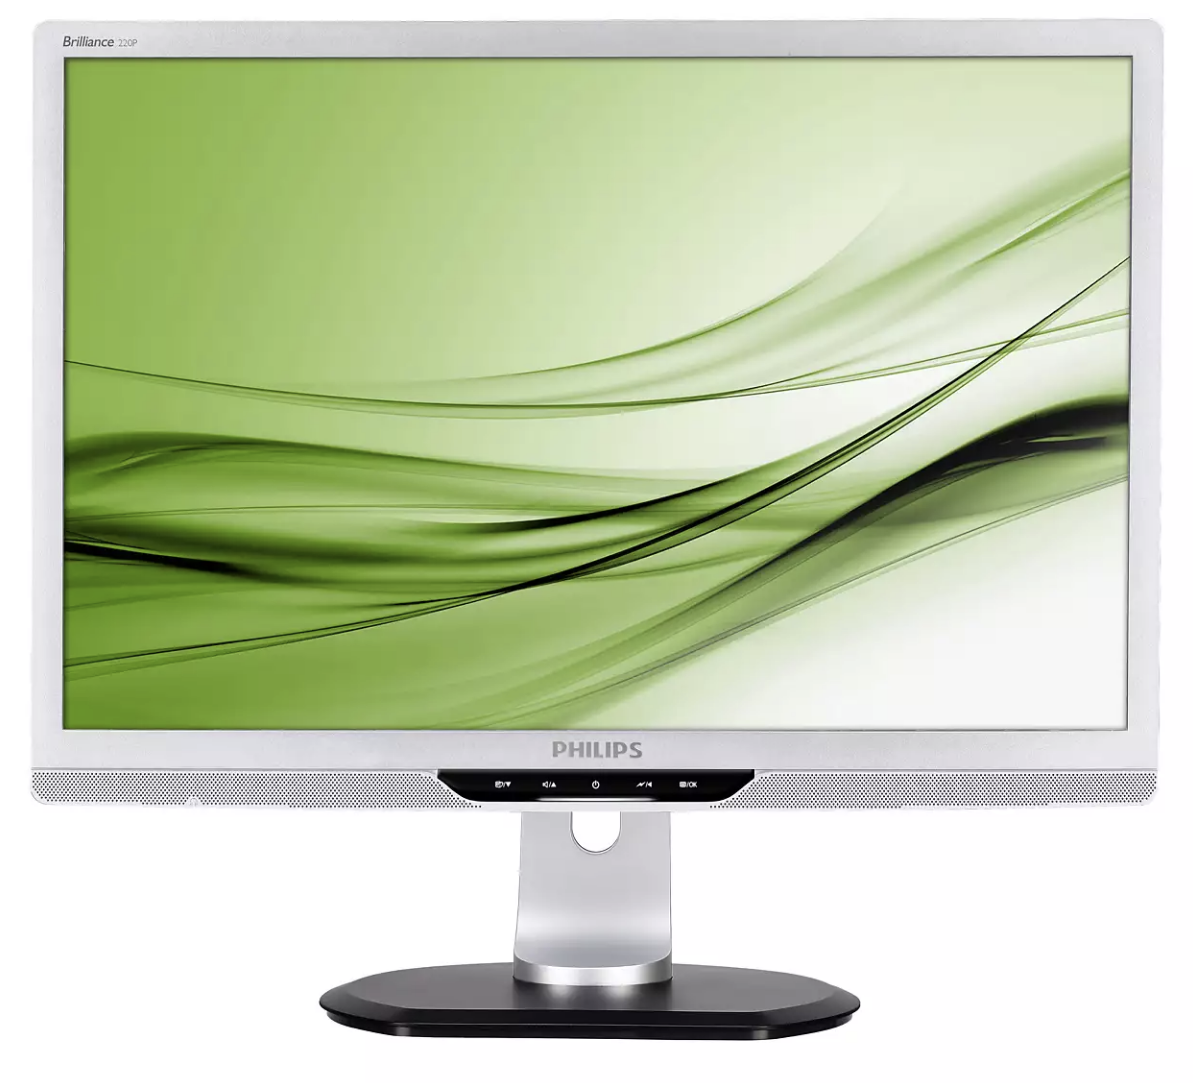 Monitor Refurbished PHILIPS 220P2, 22 Inch LCD, 1680 x 1050, VGA, DVI, USB